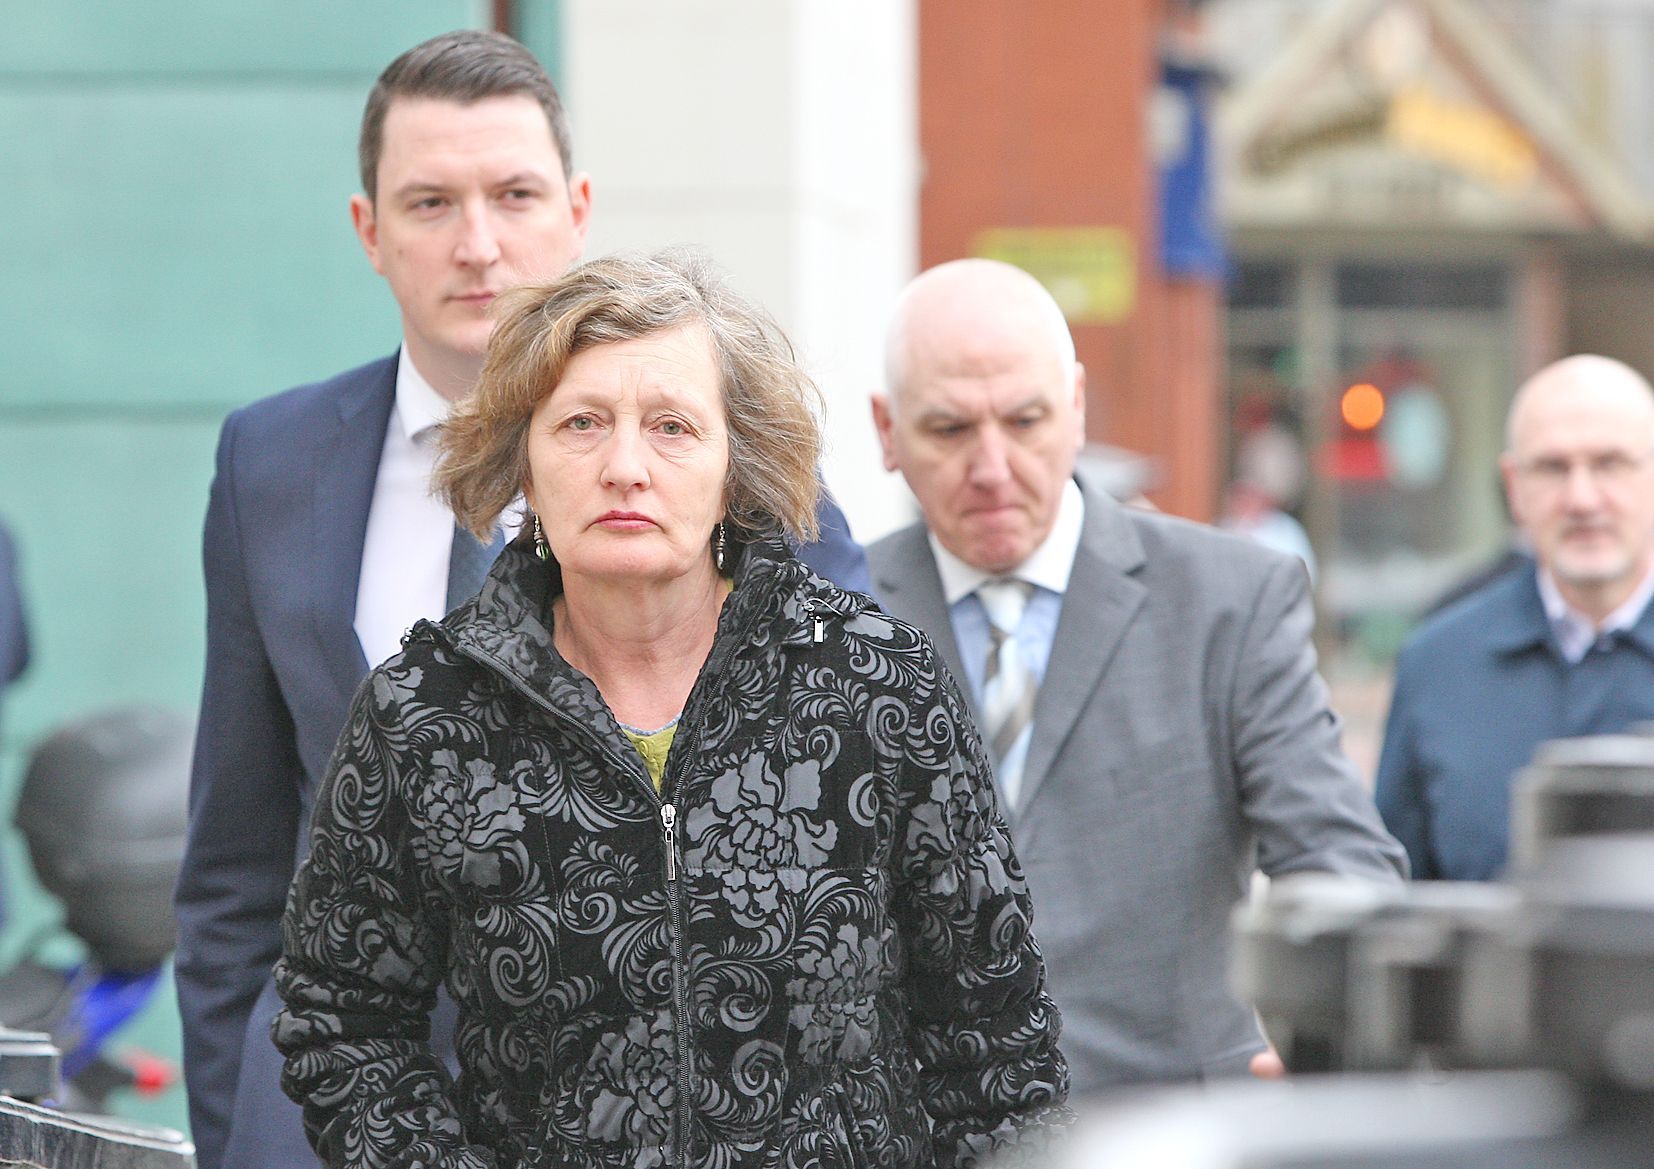 TRUTH: Geraldine Finucane and her son John, the MP for North Belfast